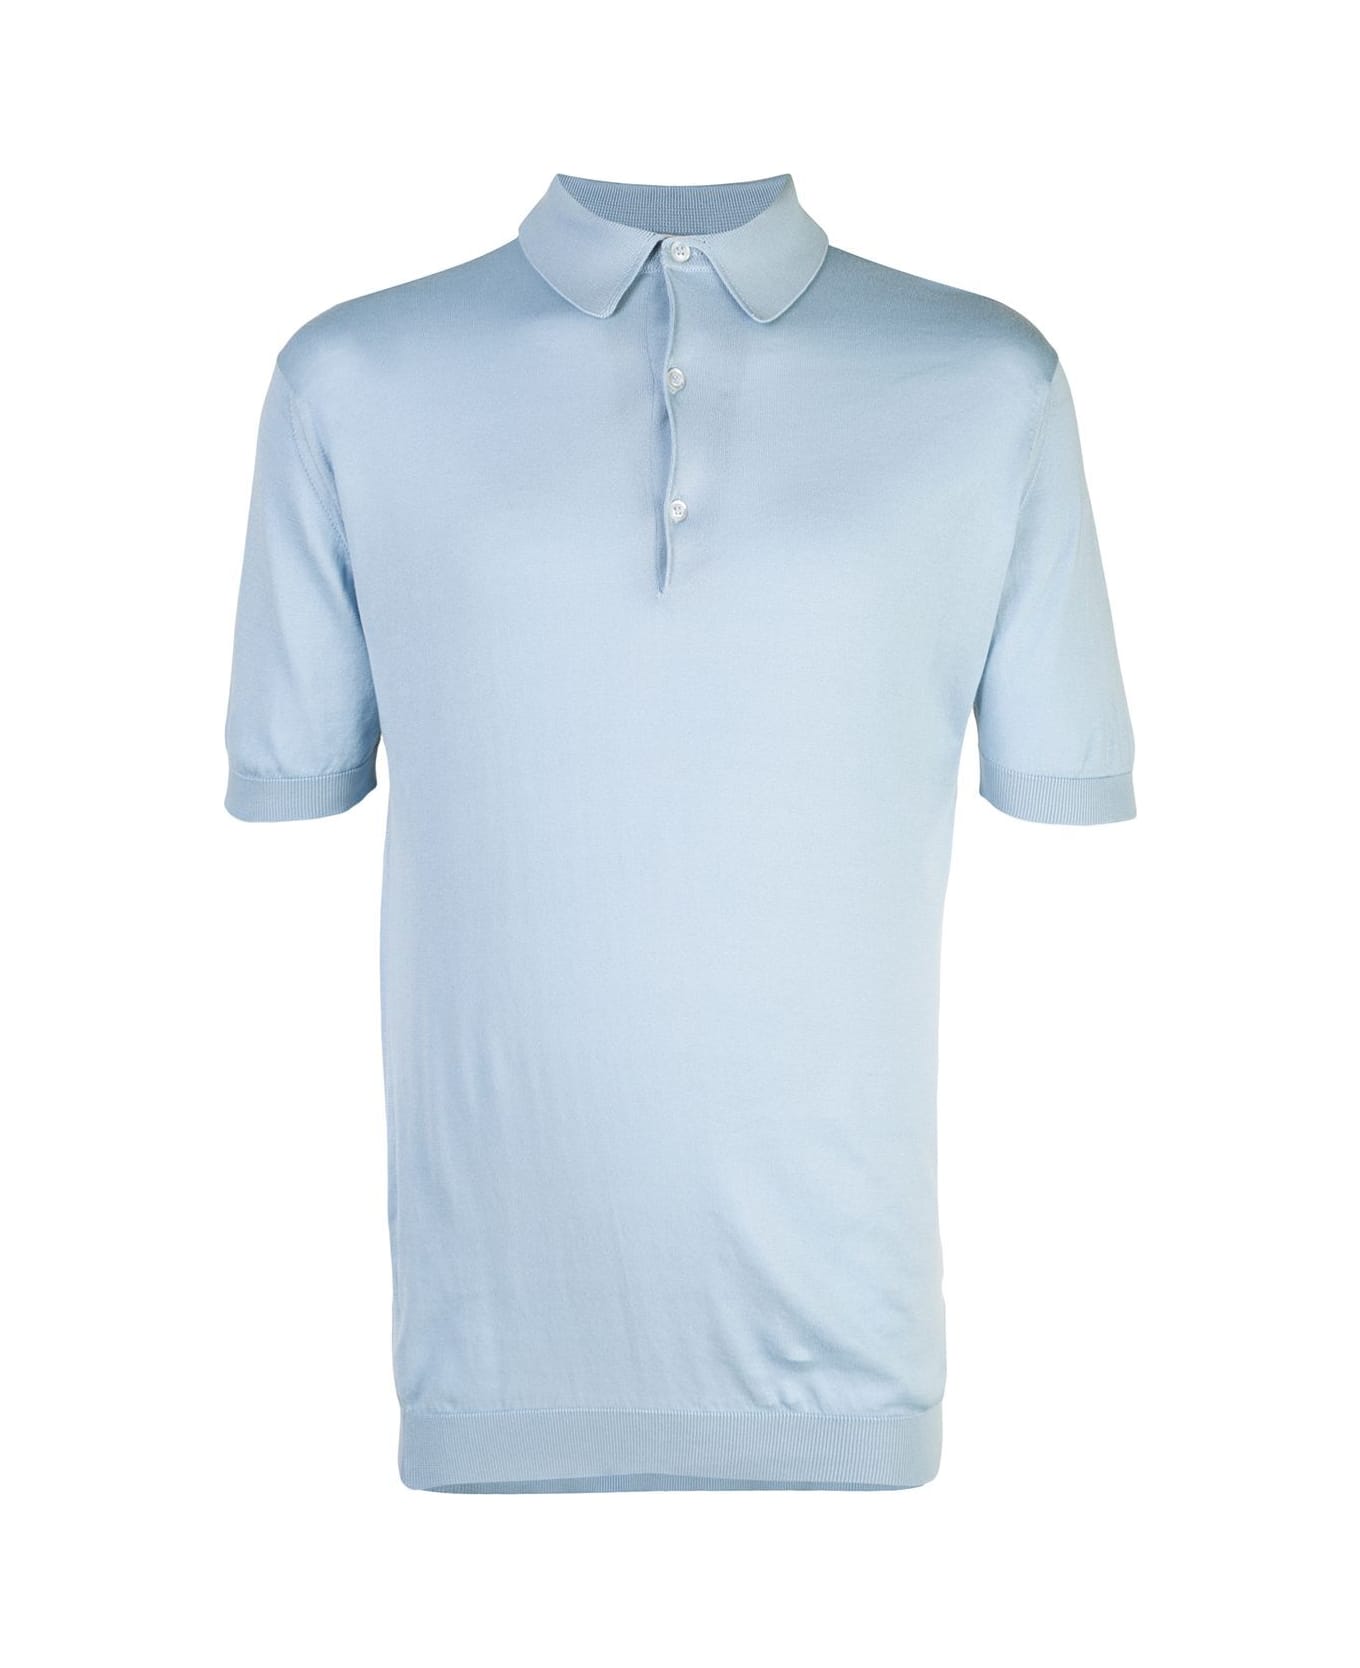 John Smedley Adrian Short Sleeves Shirt - Mirage Blue シャツ